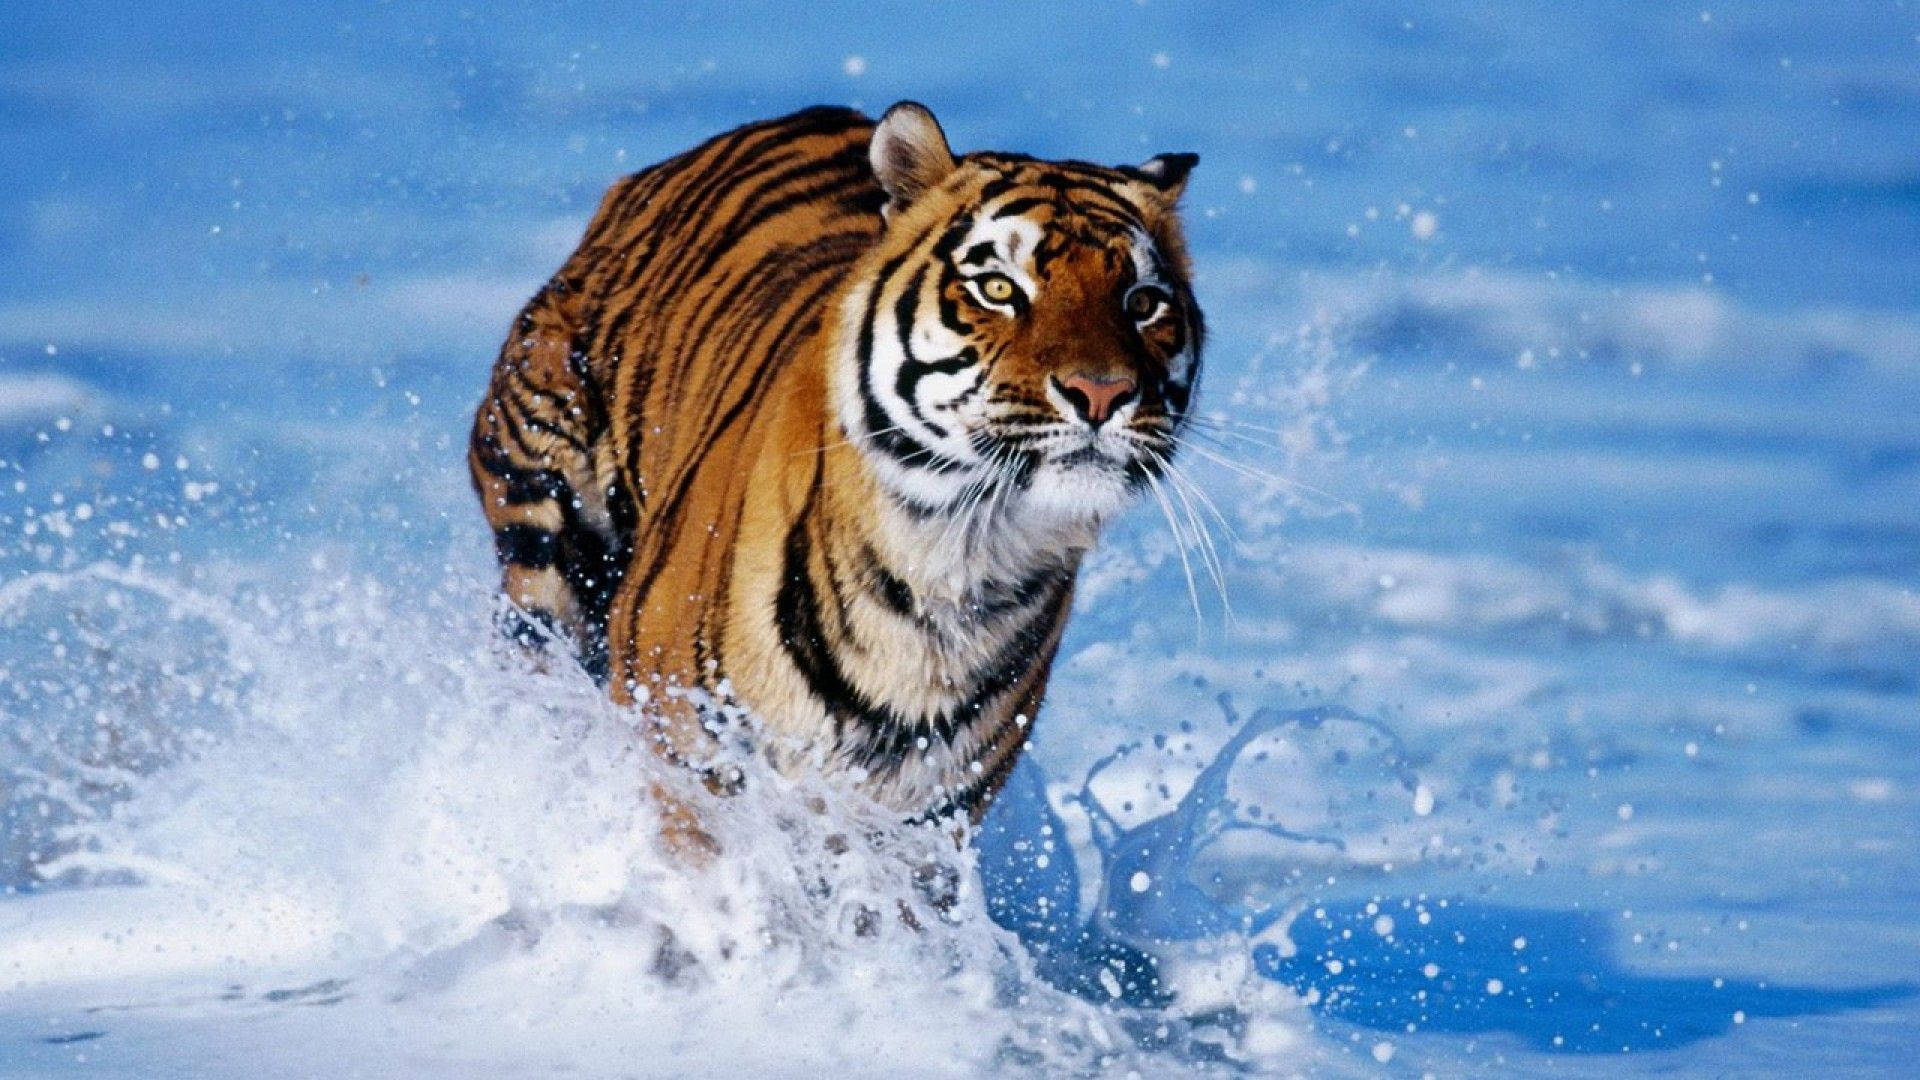 Tiger Wallpaper Images